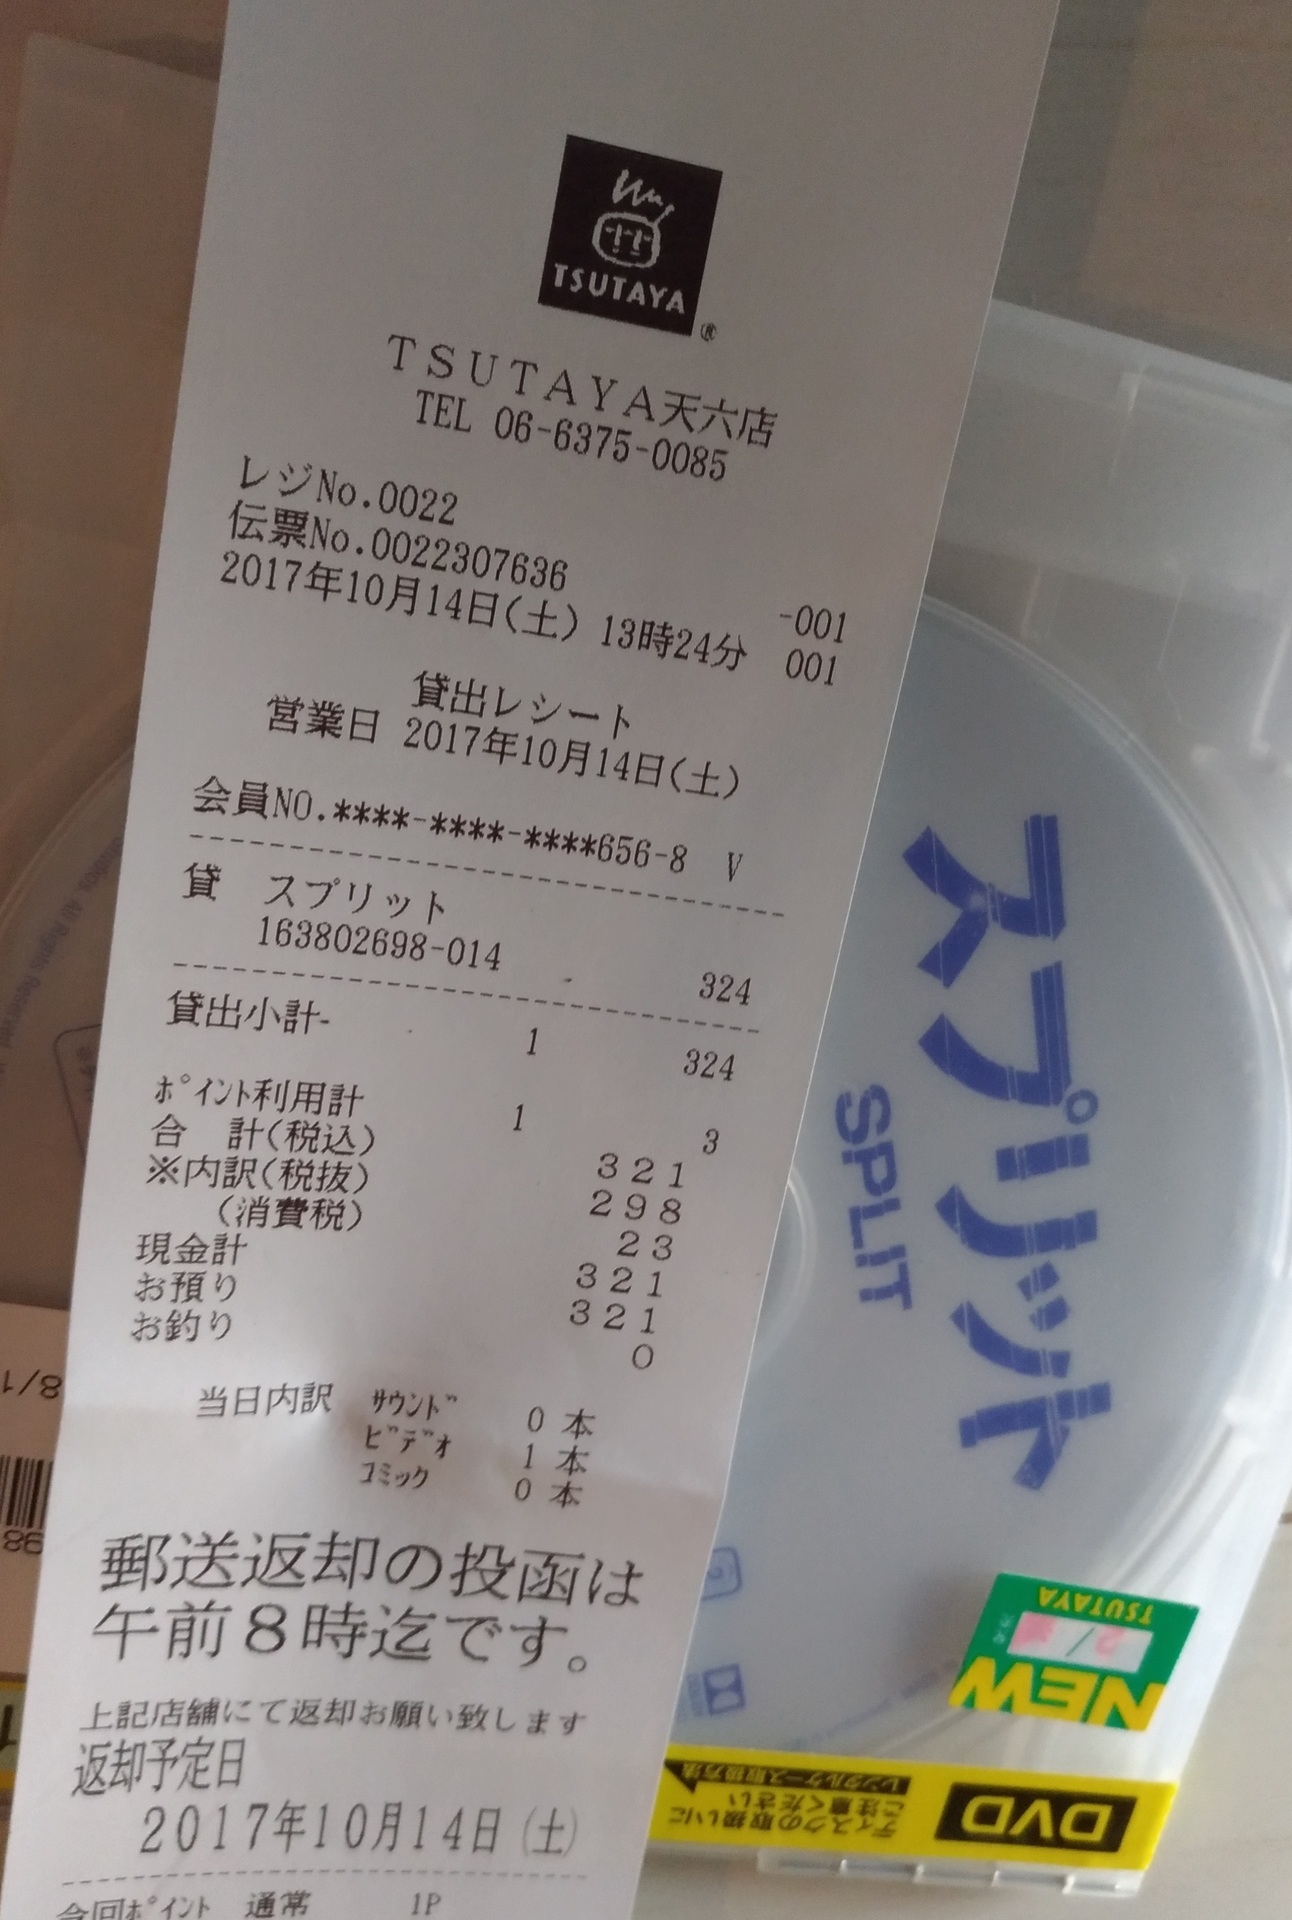 Tsutayaレンタル料金 新作映画dvdをレンタル 17年10月14日 Zenfone2laserスマホ設定 おすすめブログスクリーンショット